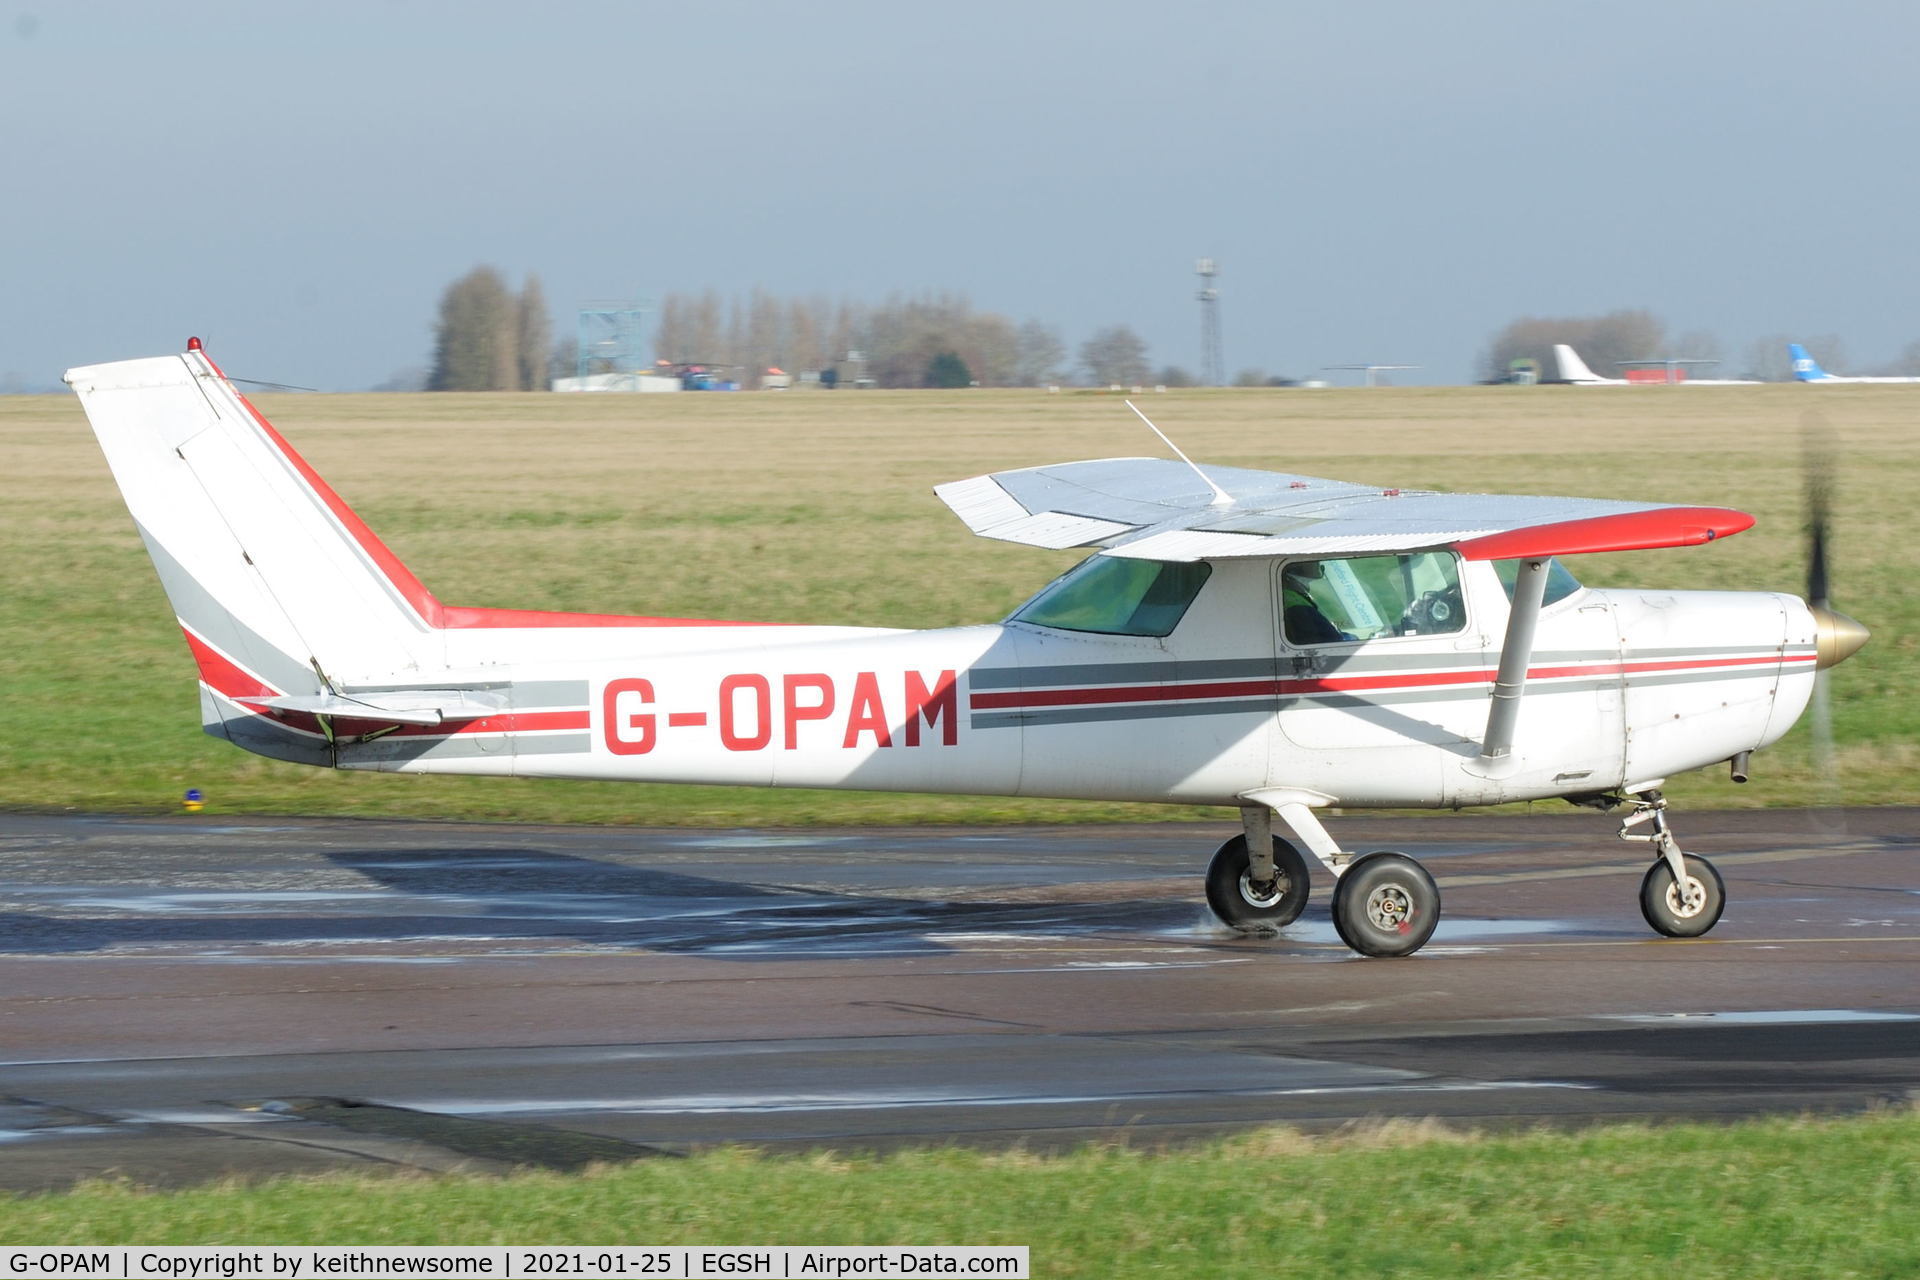 G-OPAM, 1978 Reims F152 C/N 1536, Leaving Norwich for Stapleford Tawney.